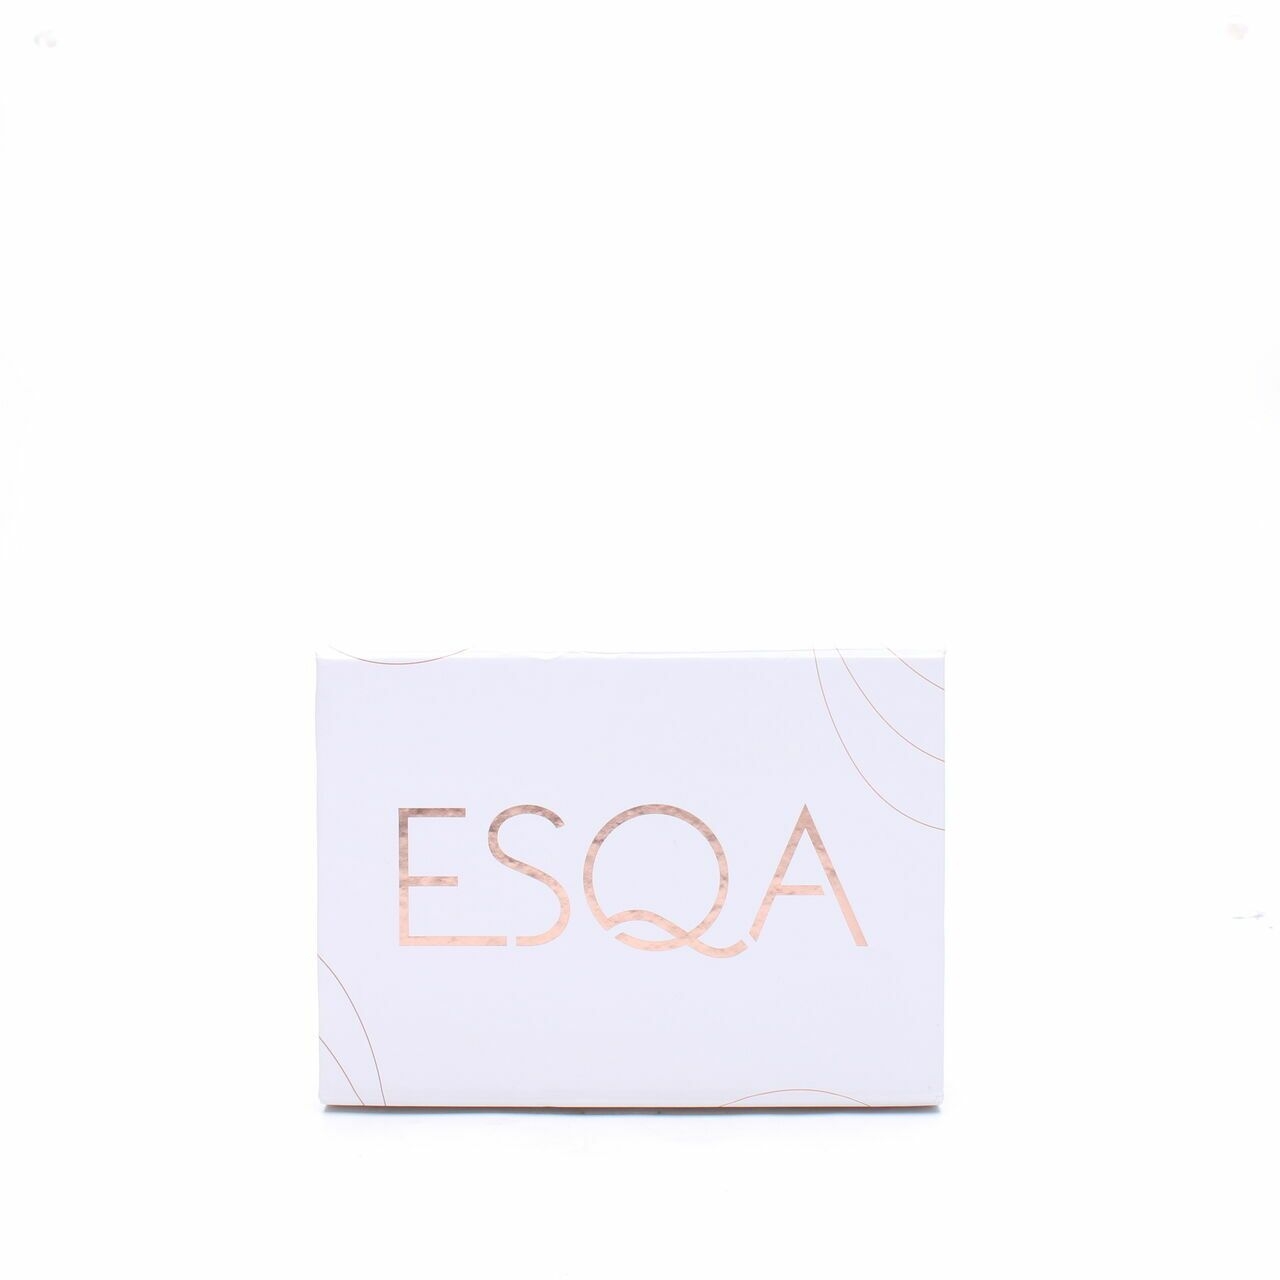 Esqa Gleam Primer Serum Hydrating Seal Primer Serum Mattifying Sets and Palette